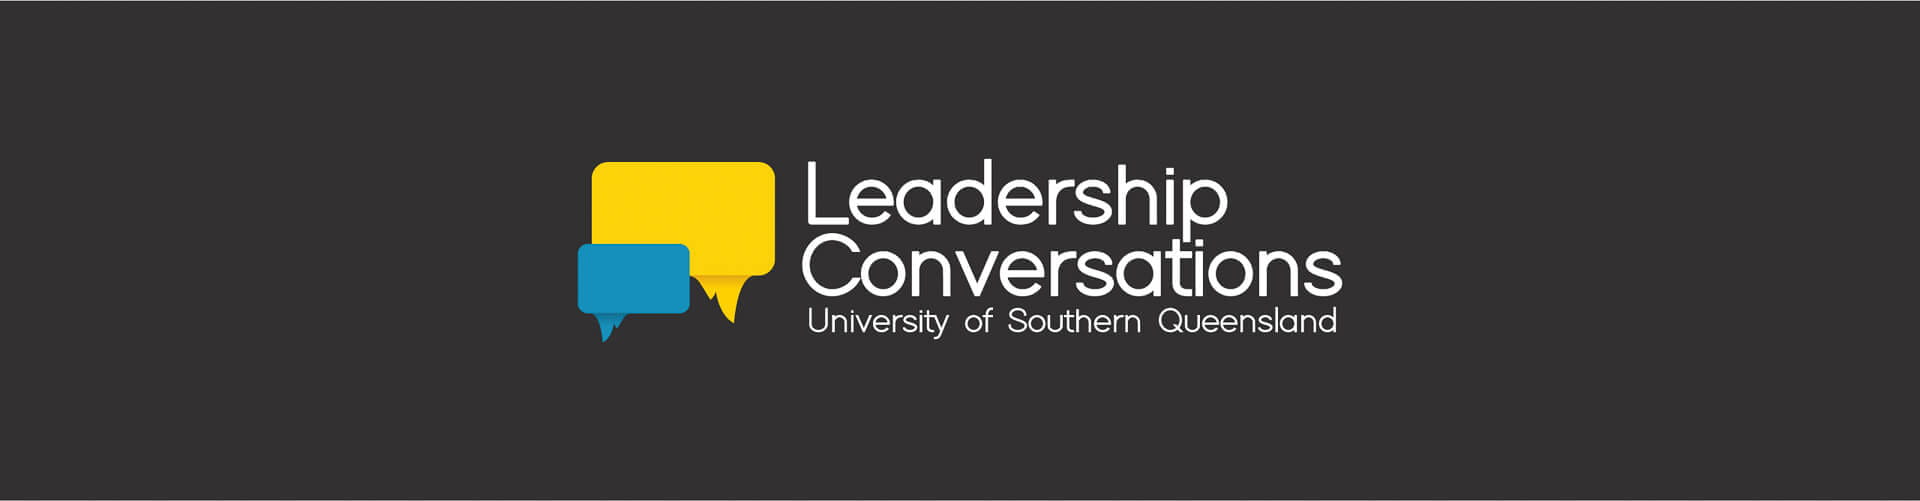 Leadership Conversations - University of Southern Queensland